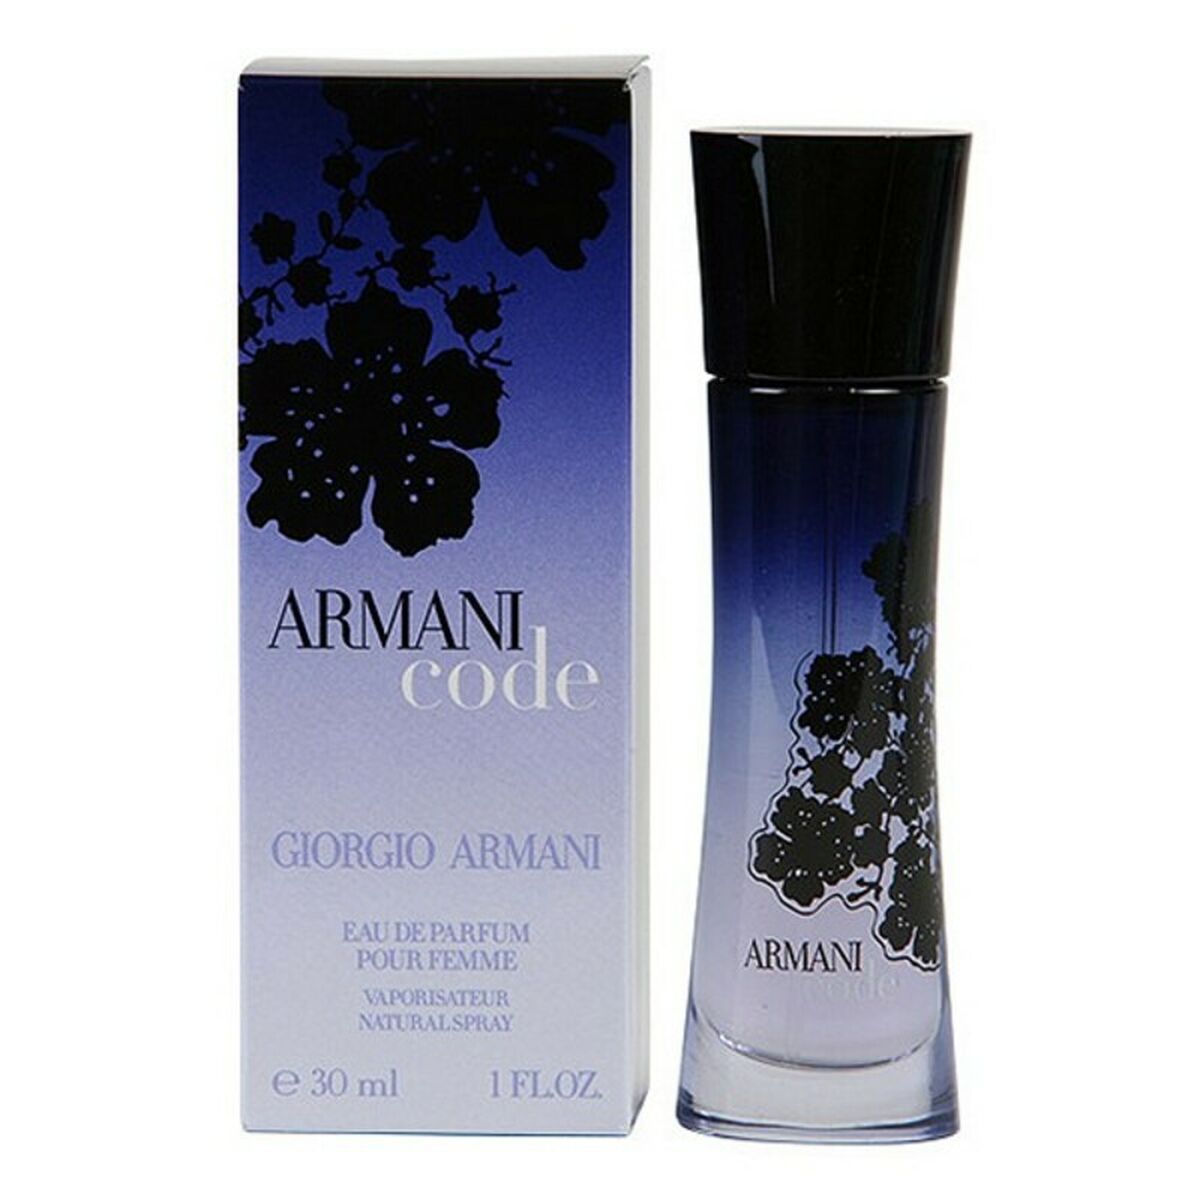 Kaufe Armani Armani Code EDP 30 ml - Damen bei AWK Flagship um € 84.00